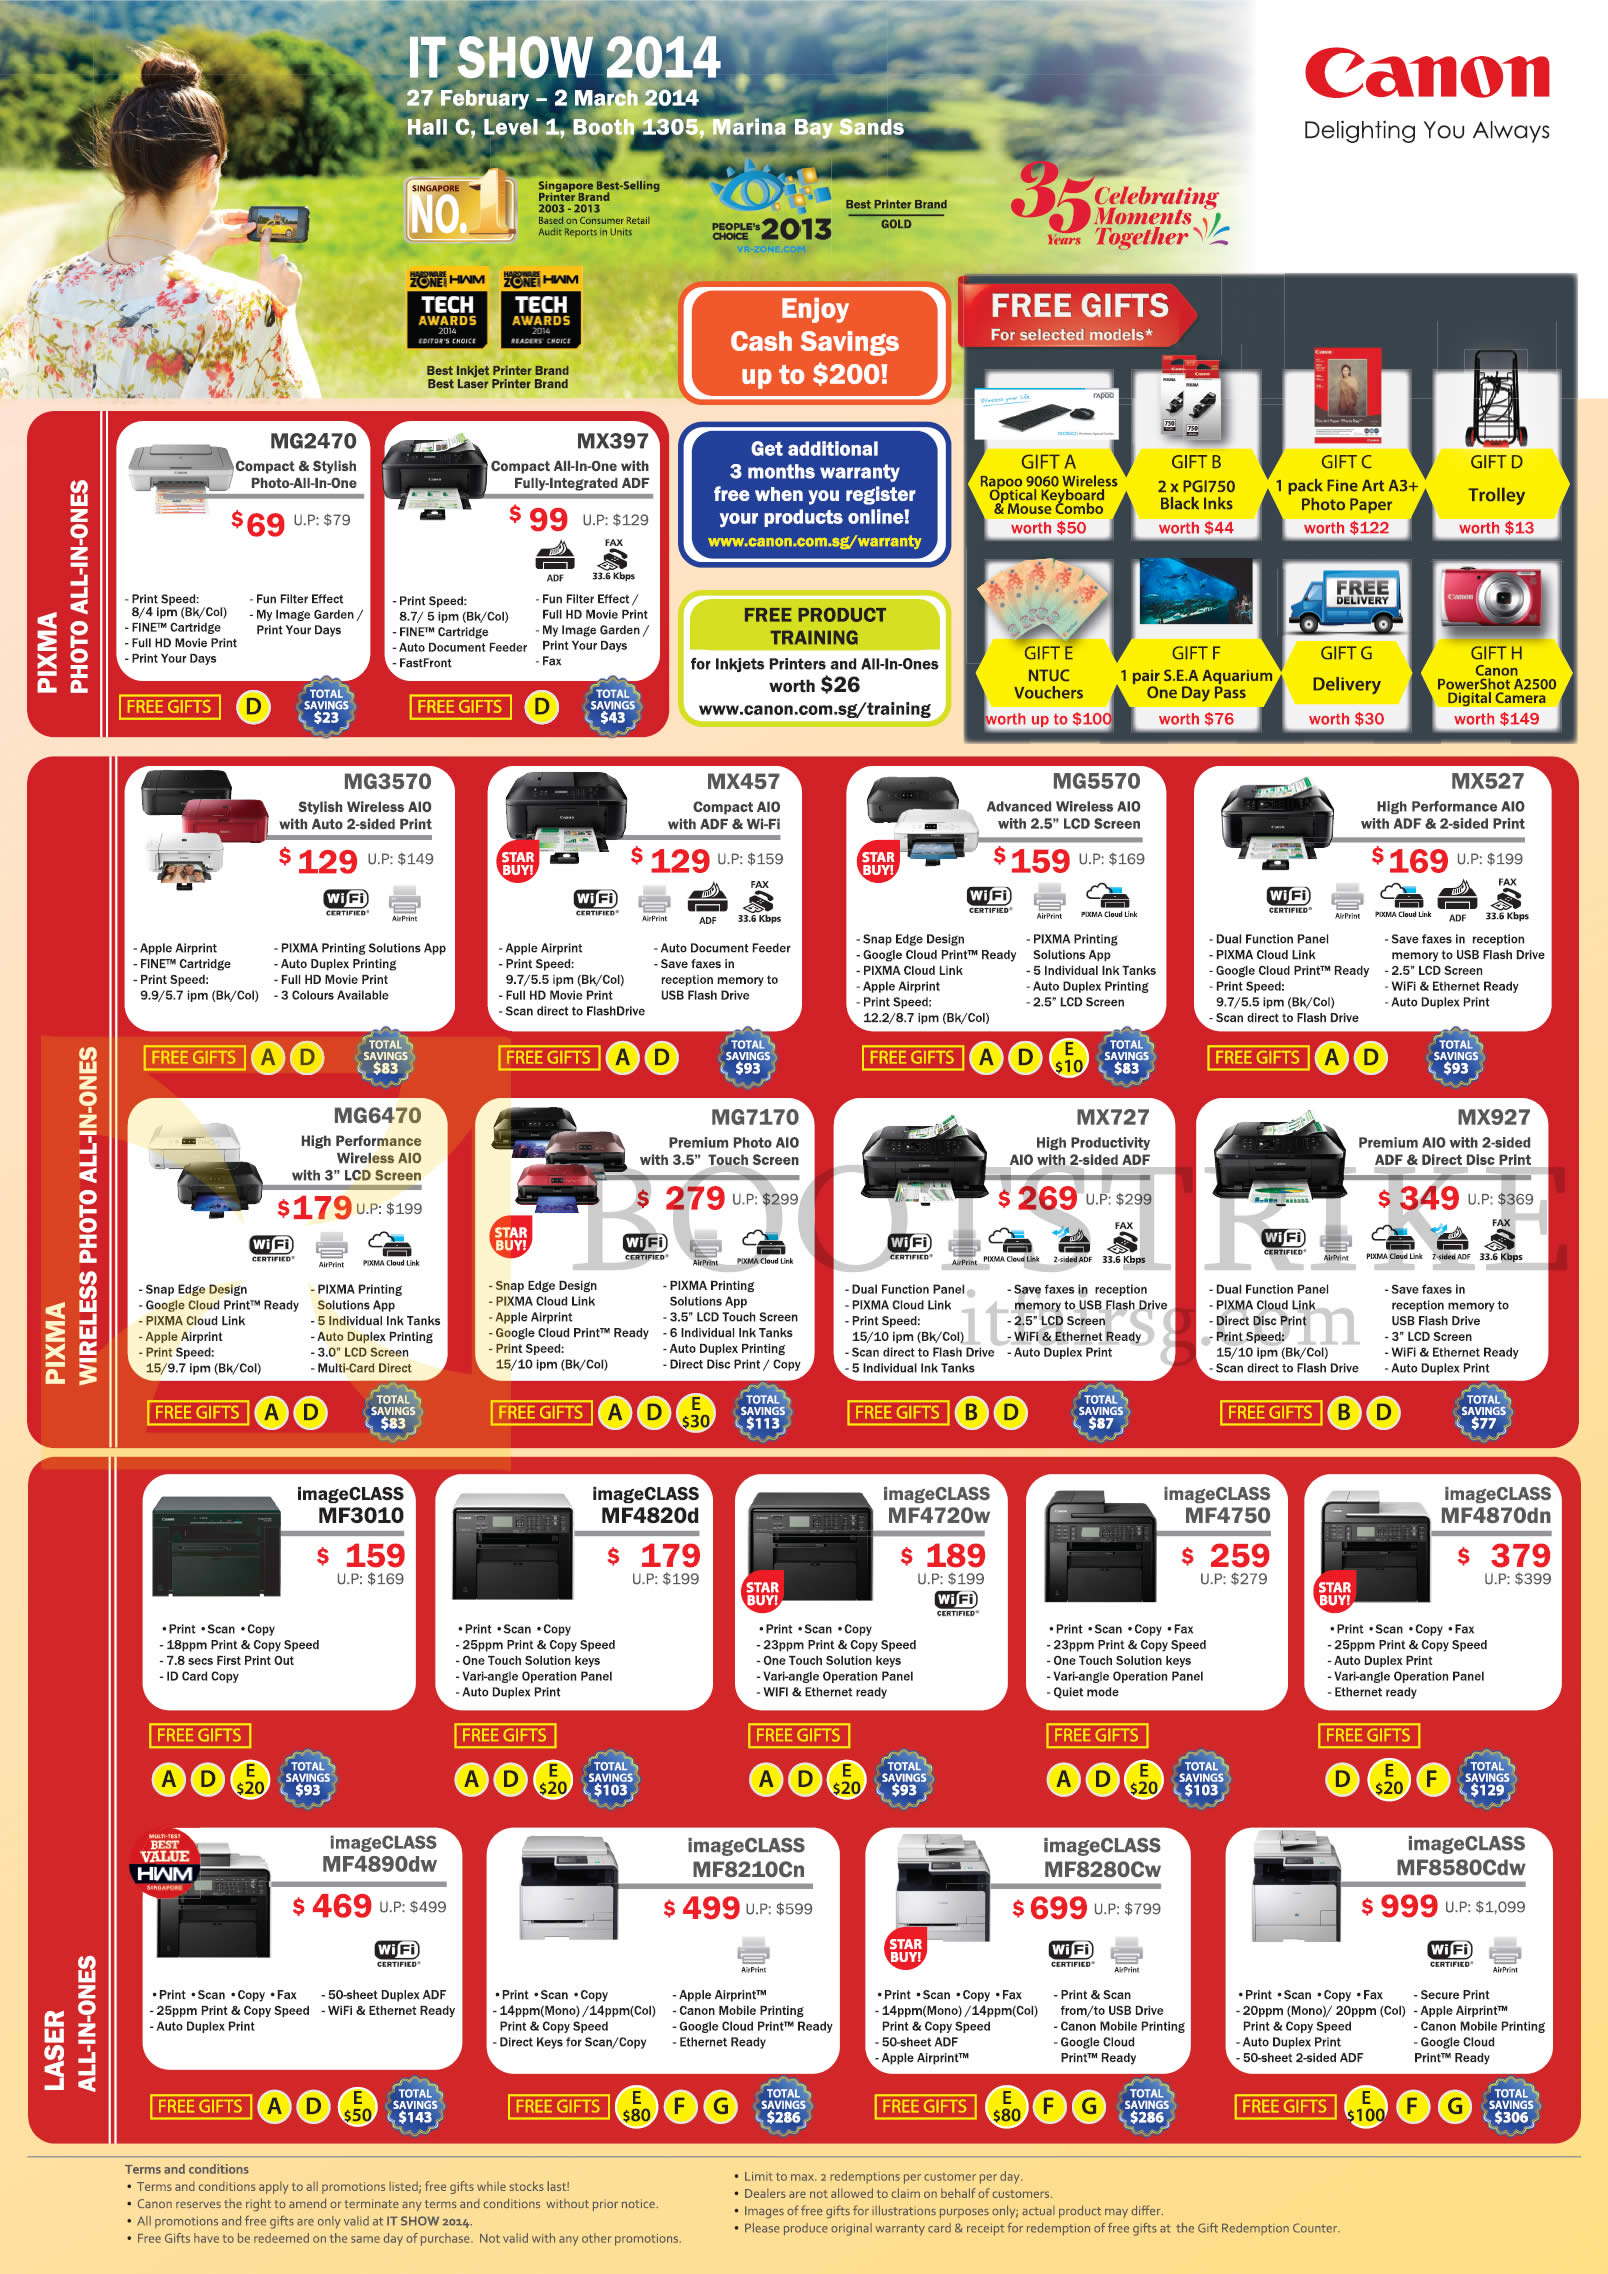 IT SHOW 2014 price list image brochure of Canon Printers Inkjet MG2470, MX397, MG3570, MX457, MG5570, MX527, MG6470, MG7170, MX727, MX927, ImageCLASS Laser MF3010, MF4820D, MF4720W, MF8210cn, MF8280cw, MF8580Cdw